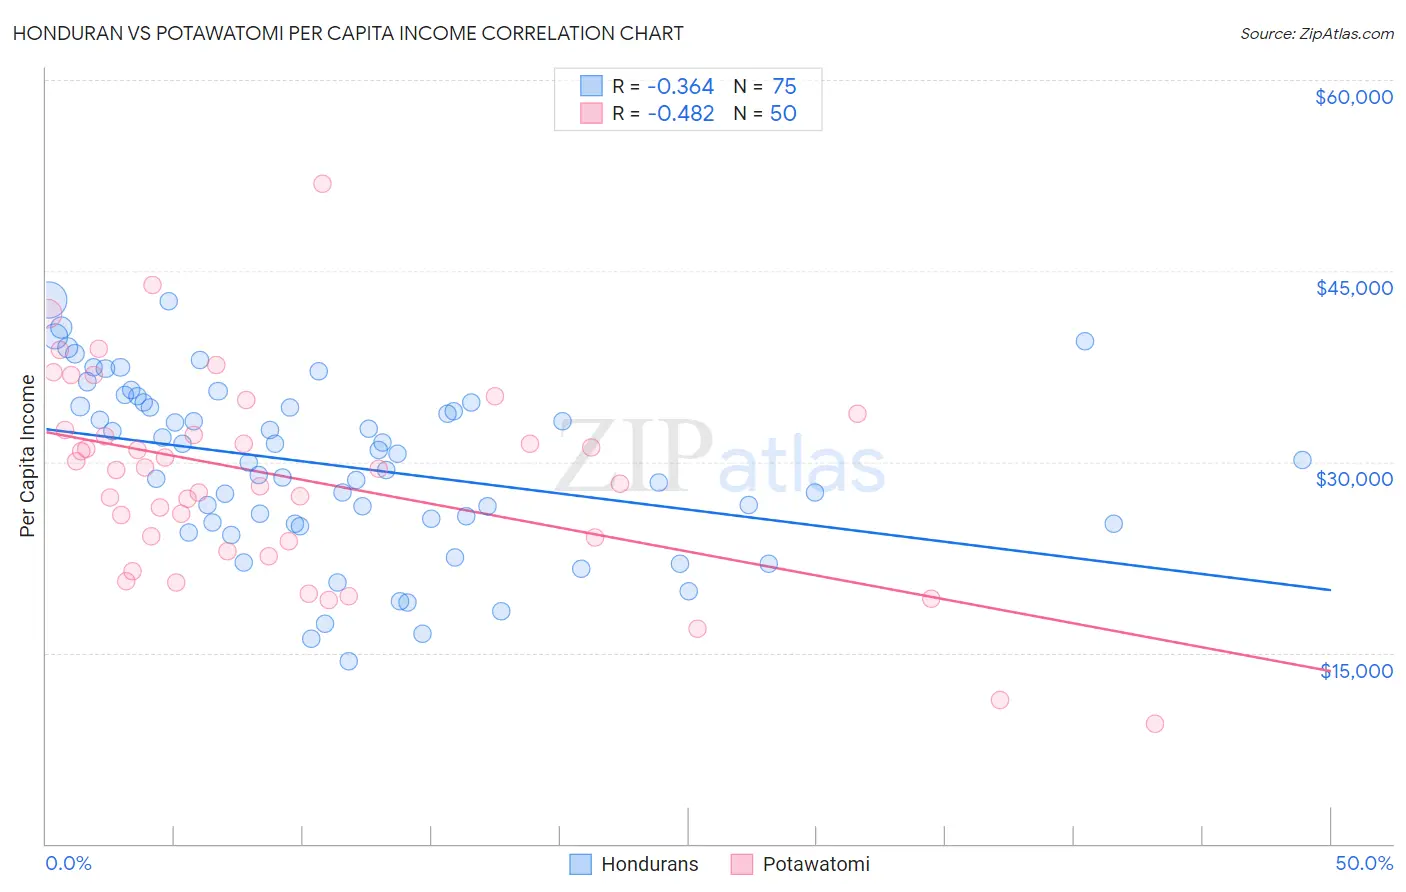 Honduran vs Potawatomi Per Capita Income